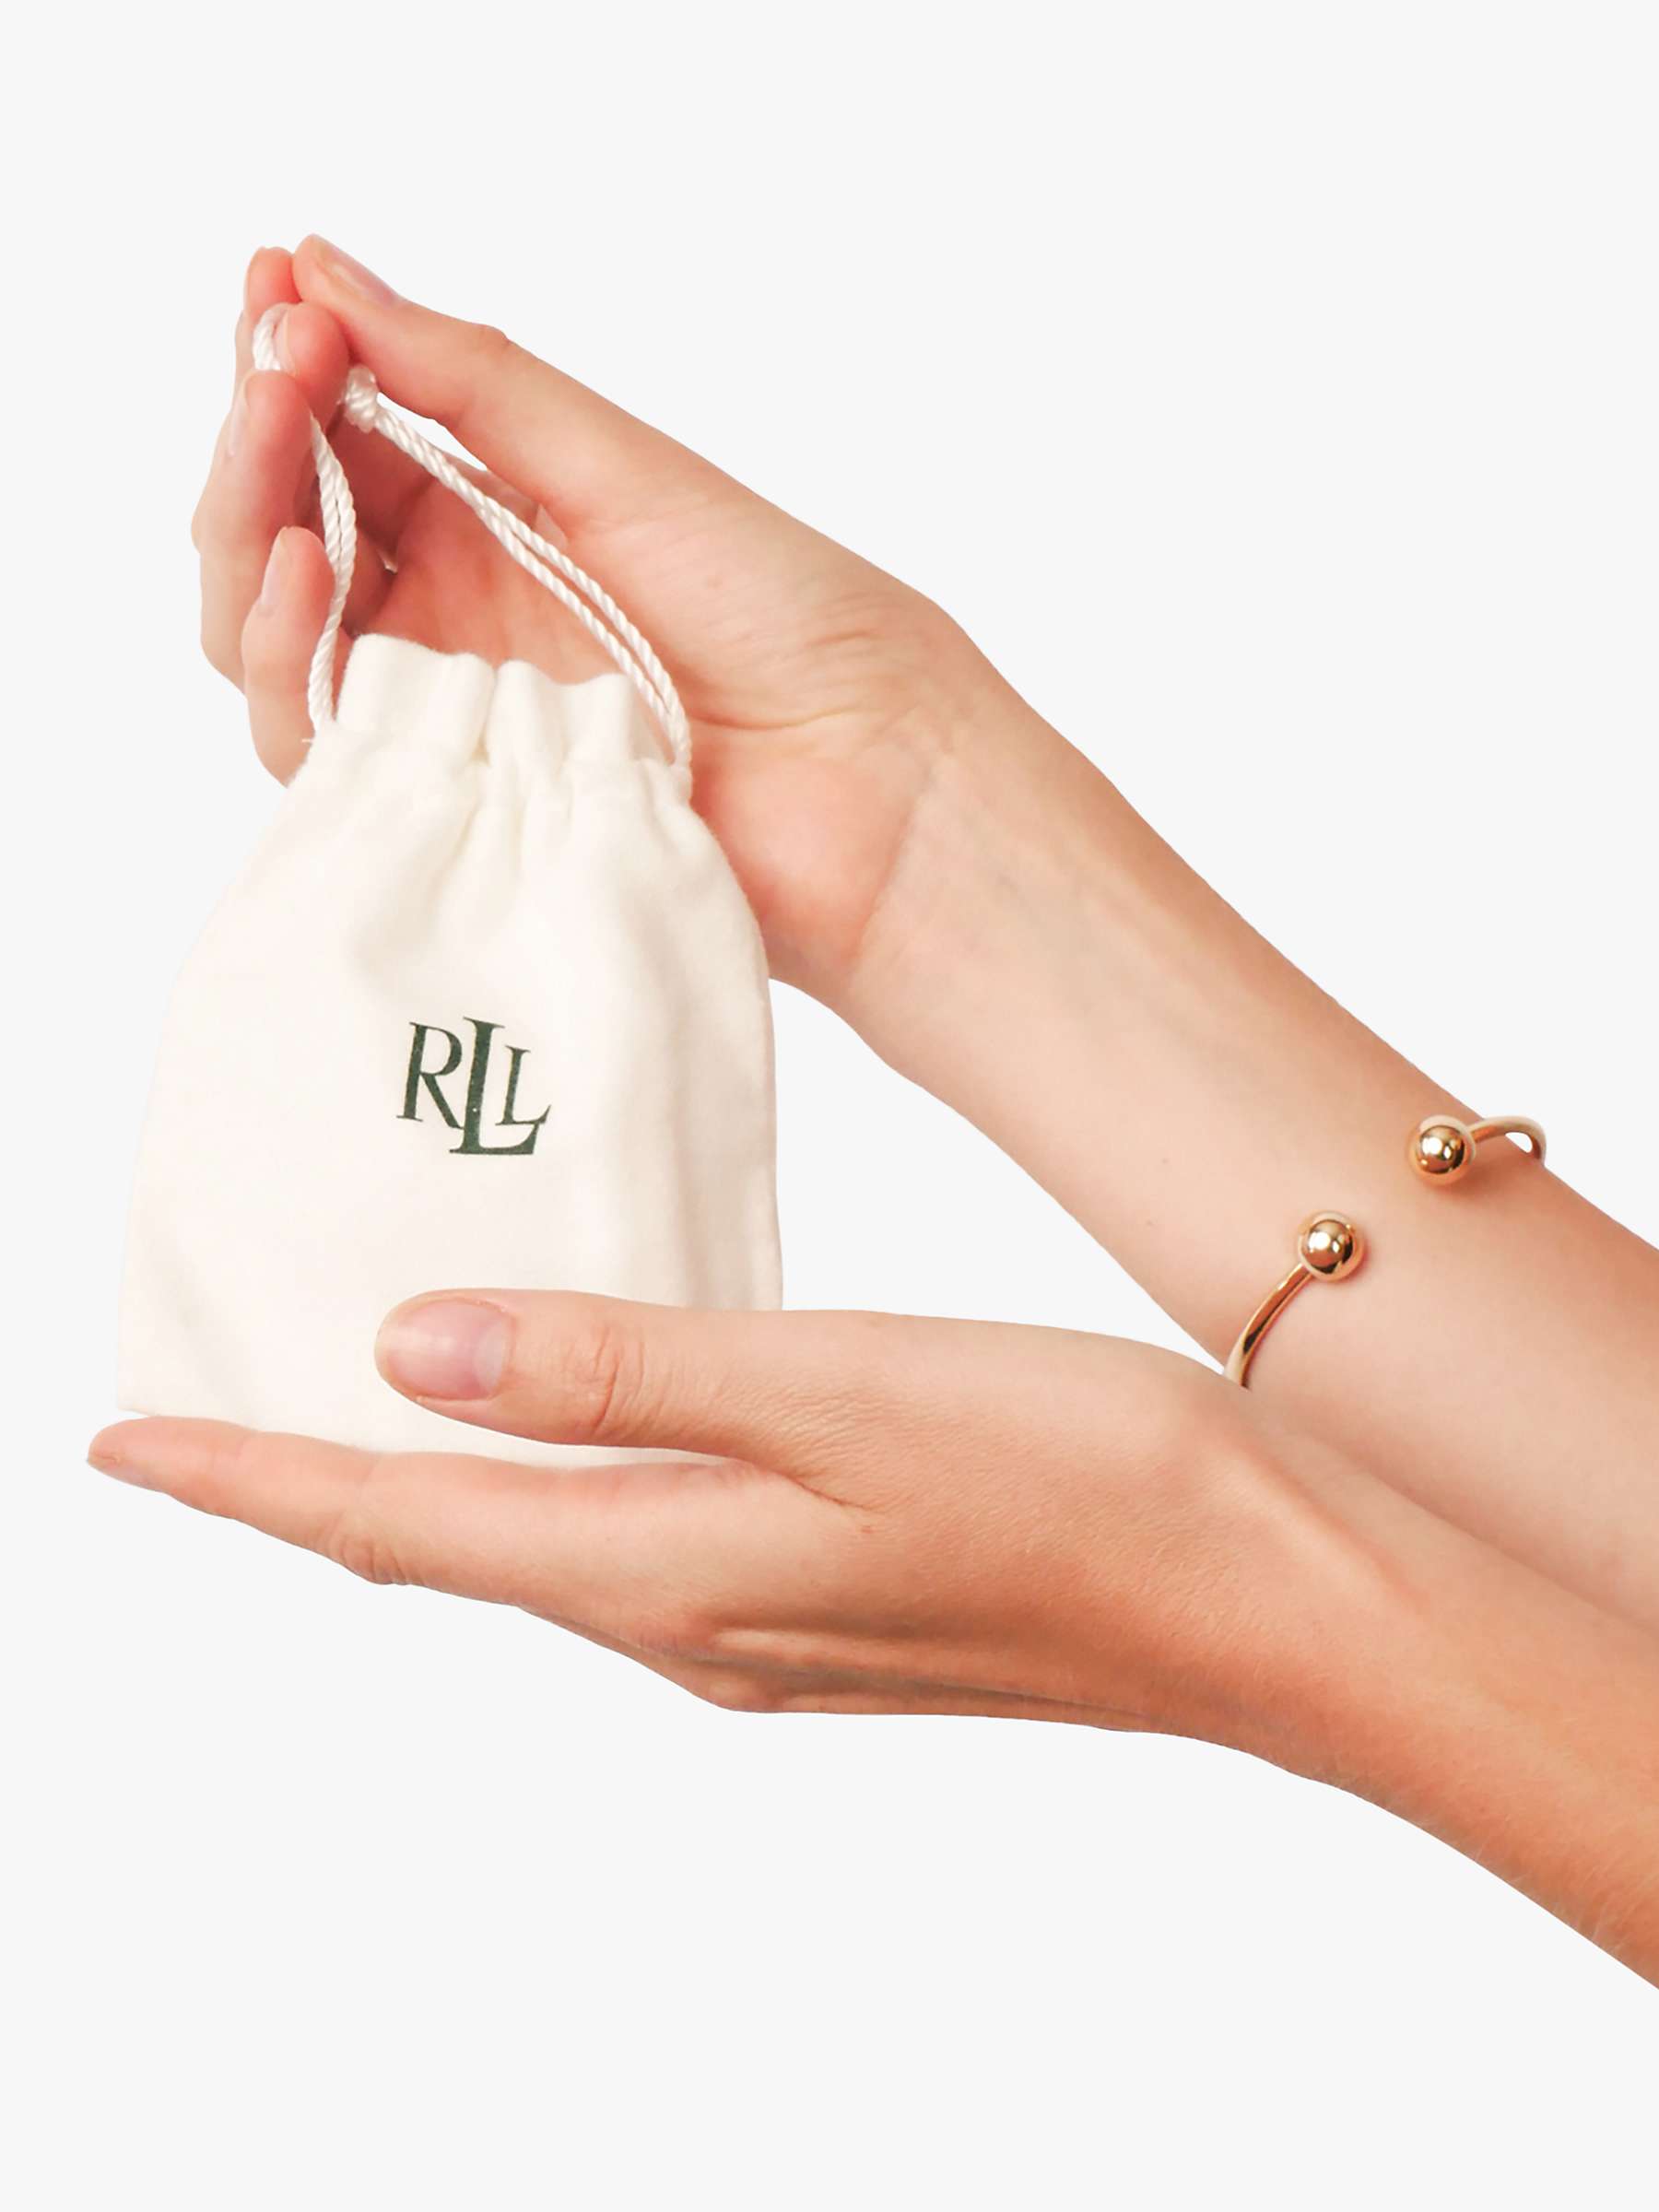 Buy Lauren Ralph Lauren Two-Tone Crest Bangle Bracelet, Silver/Gold Online at johnlewis.com